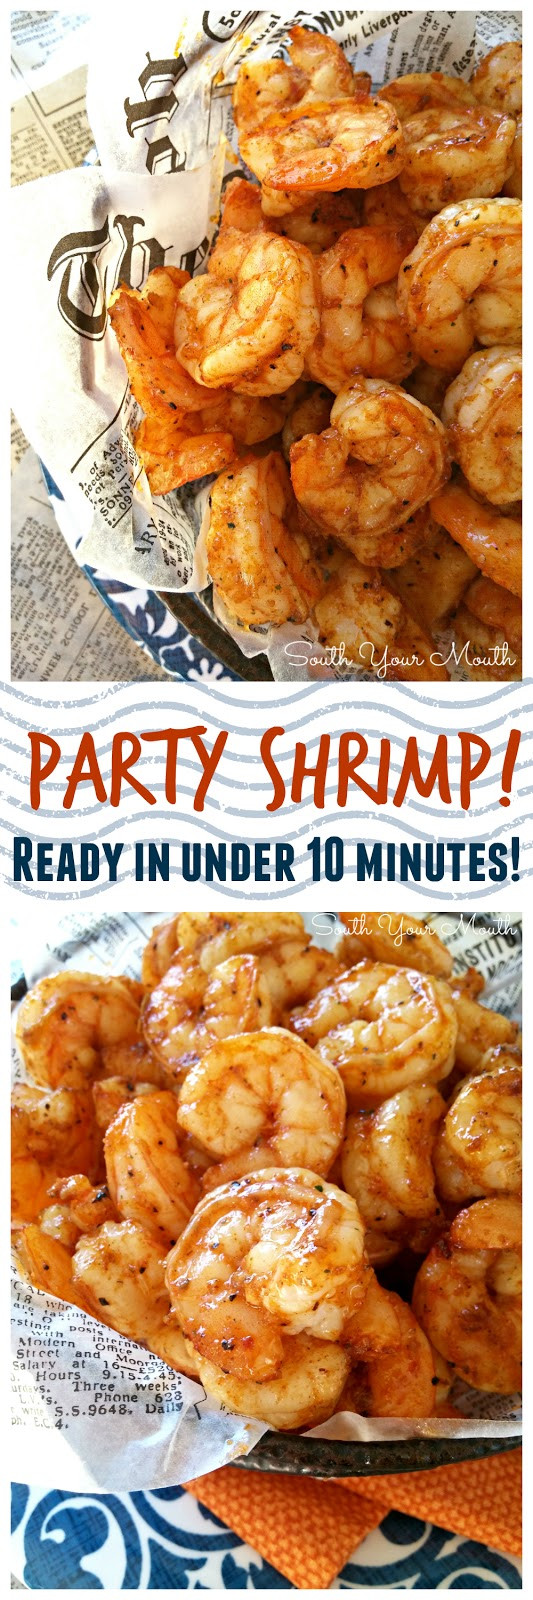 Shrimp Appetizers For Parties
 South Your Mouth Party Shrimp